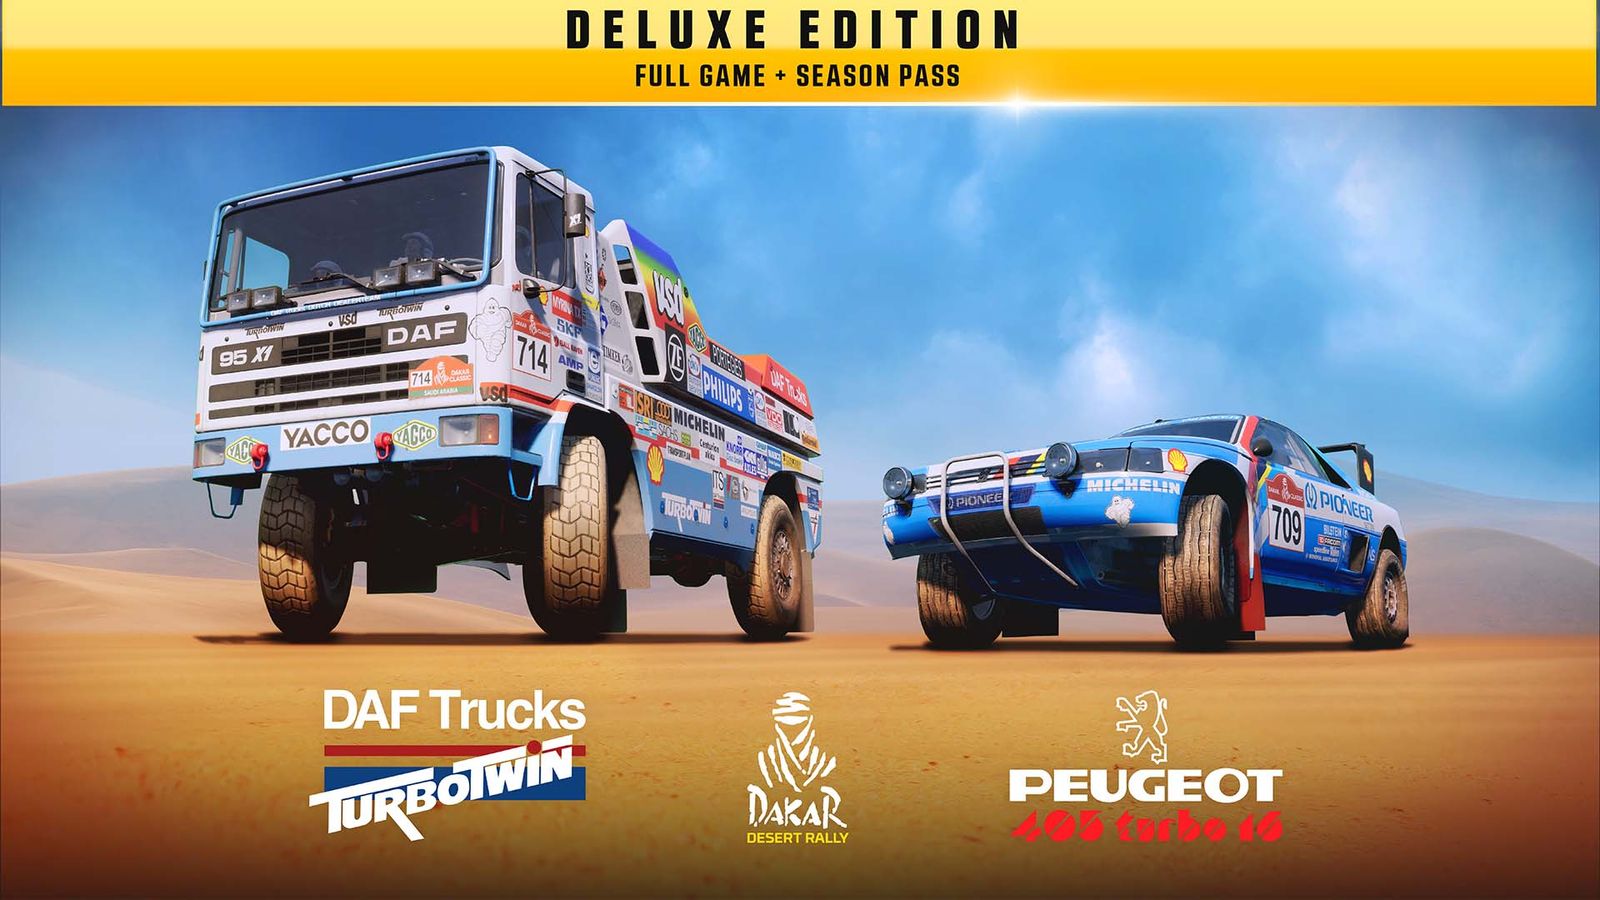 Dakar Desert Rally Deluxe Edition